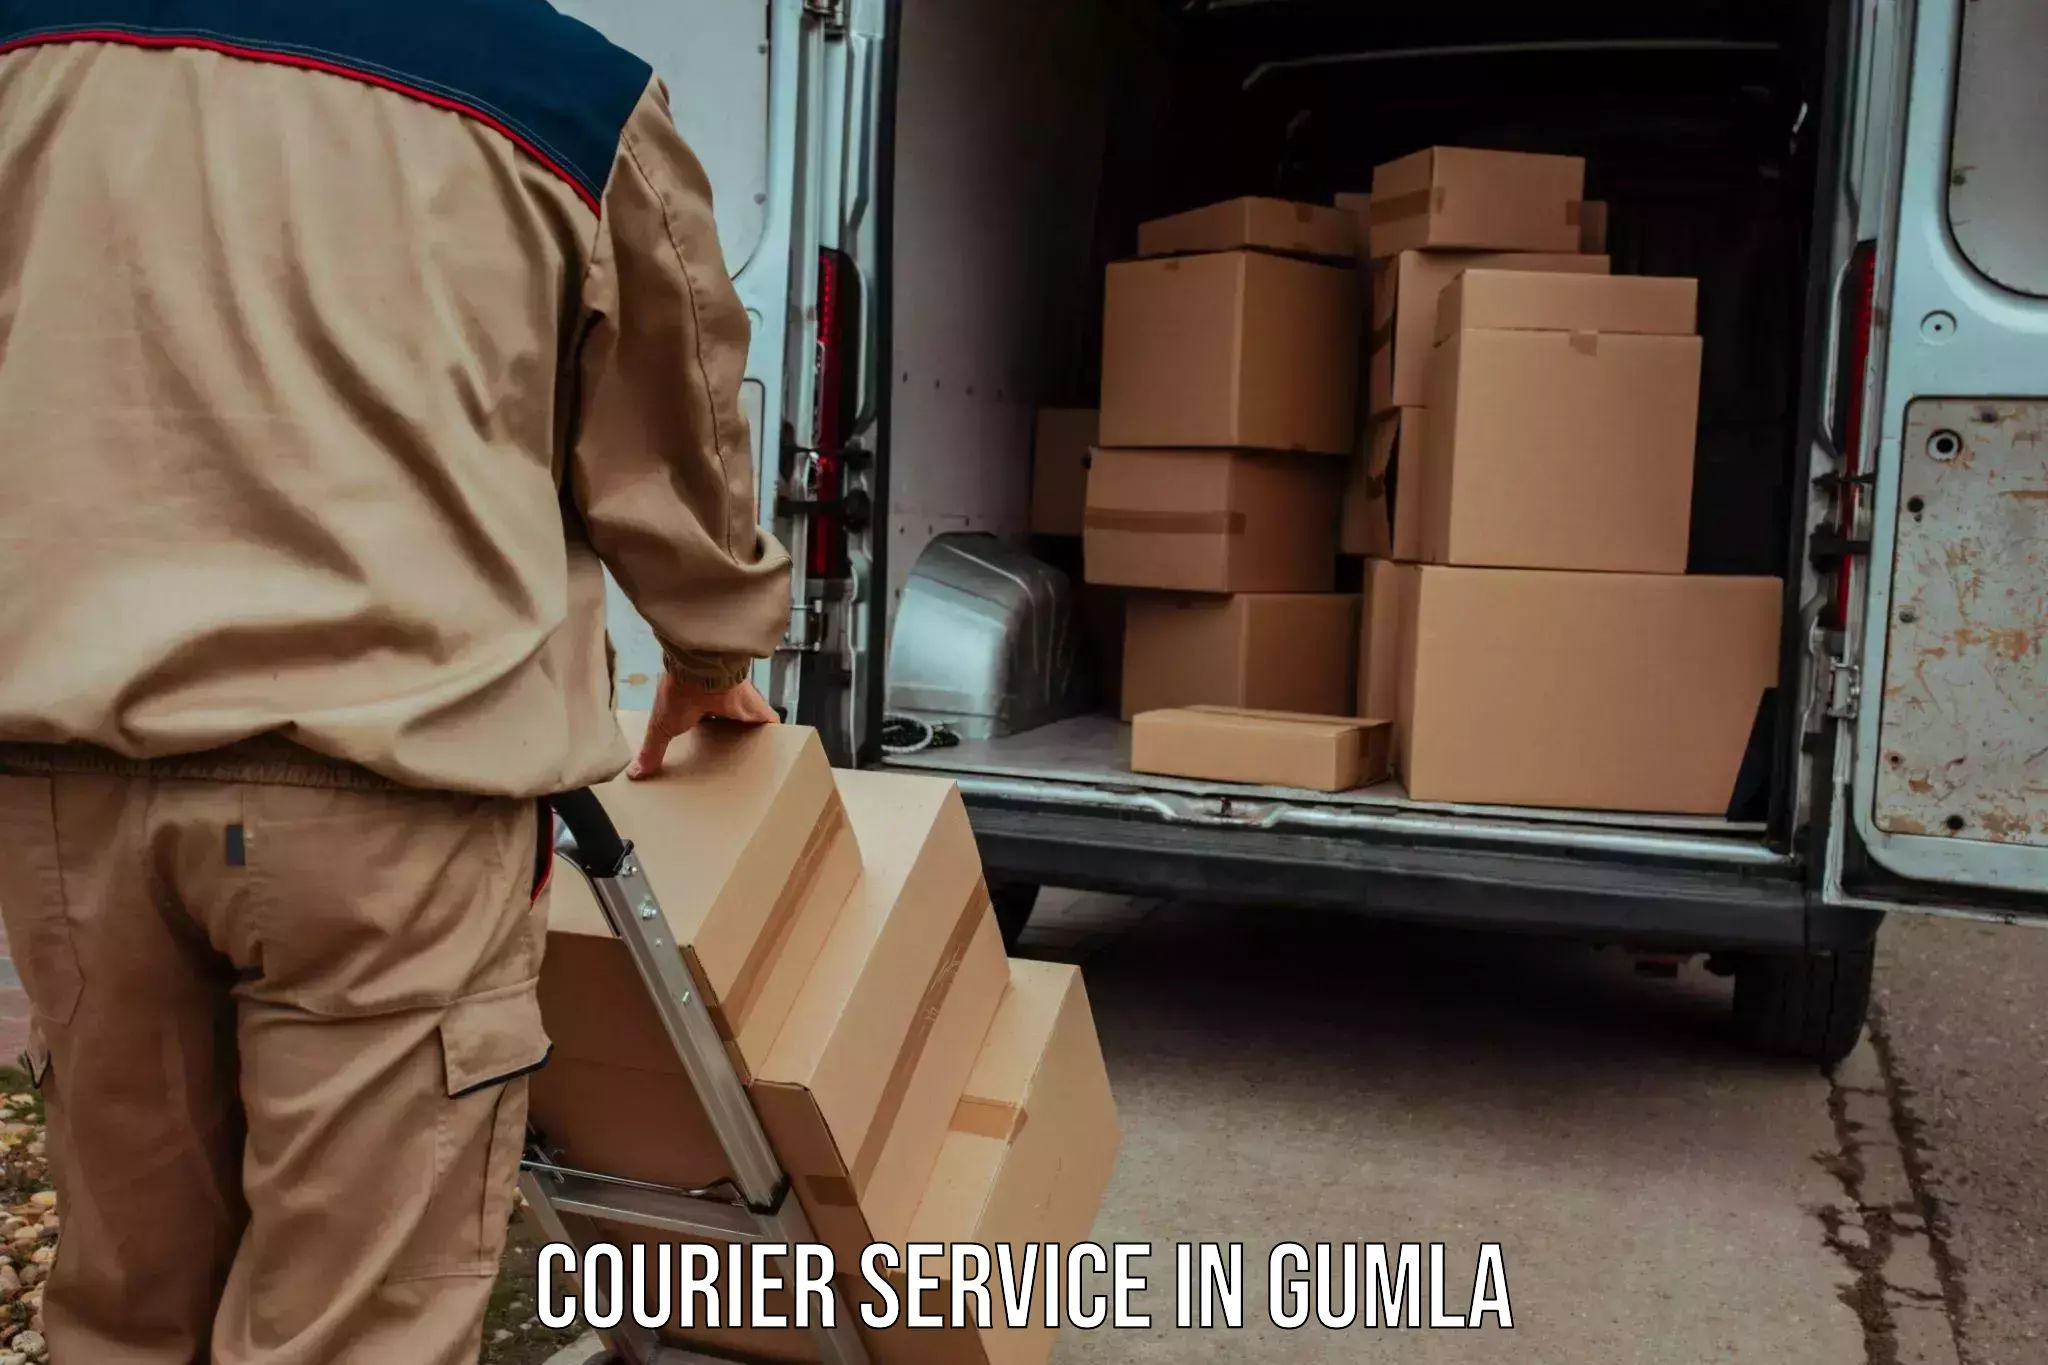 Courier service partnerships in Gumla